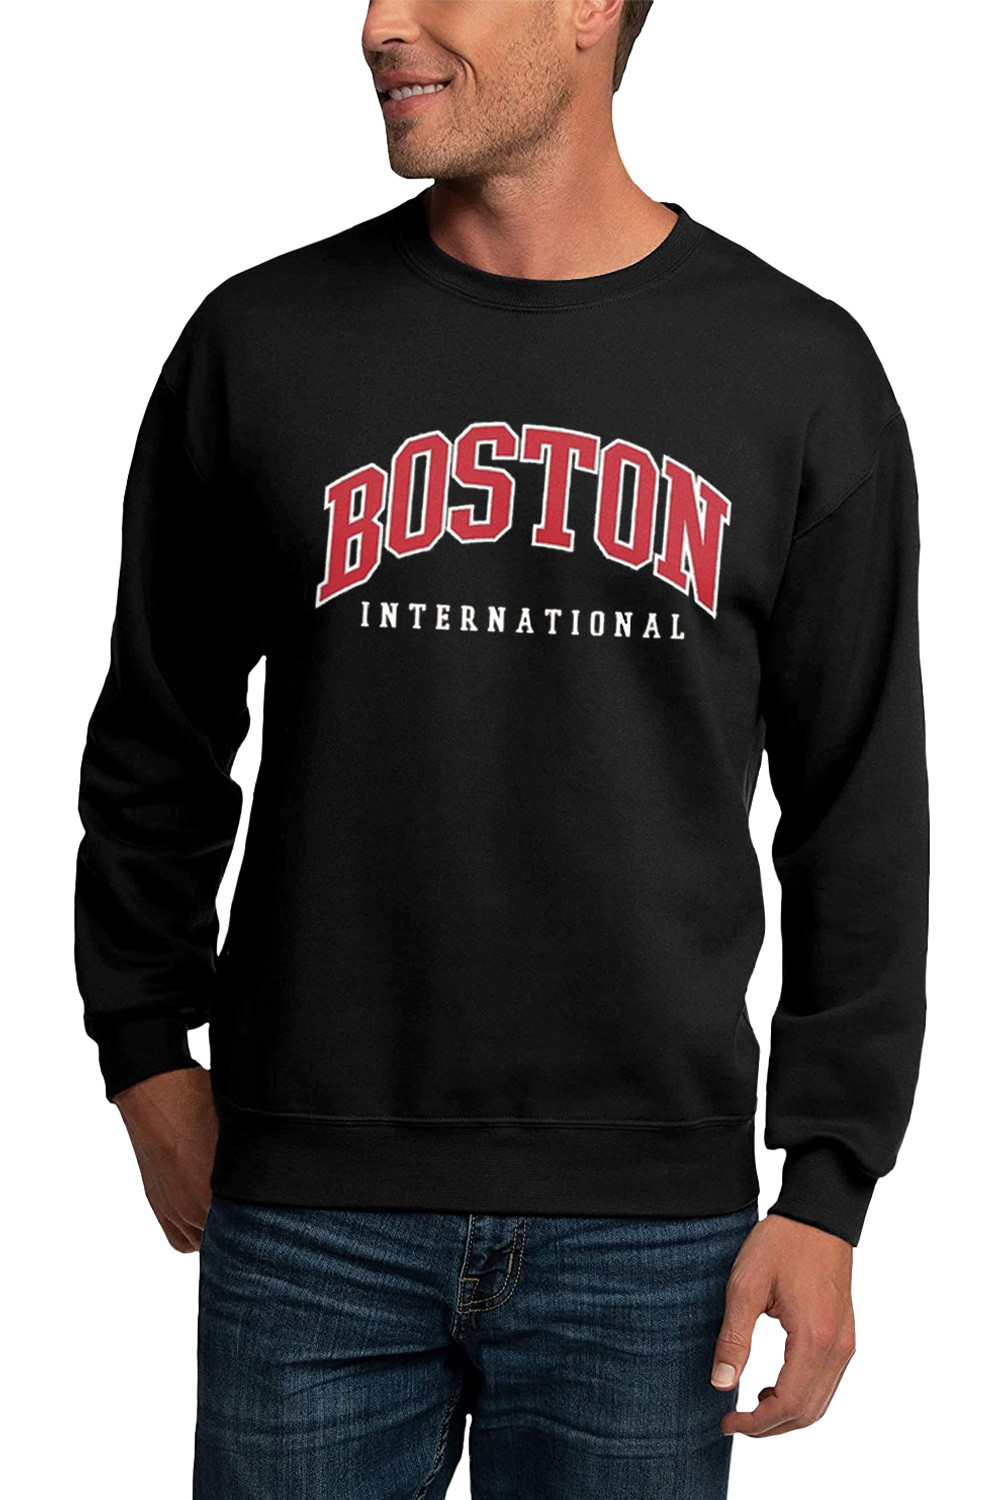 Camisola masculina preta com letras BOSTON estampada gola redonda